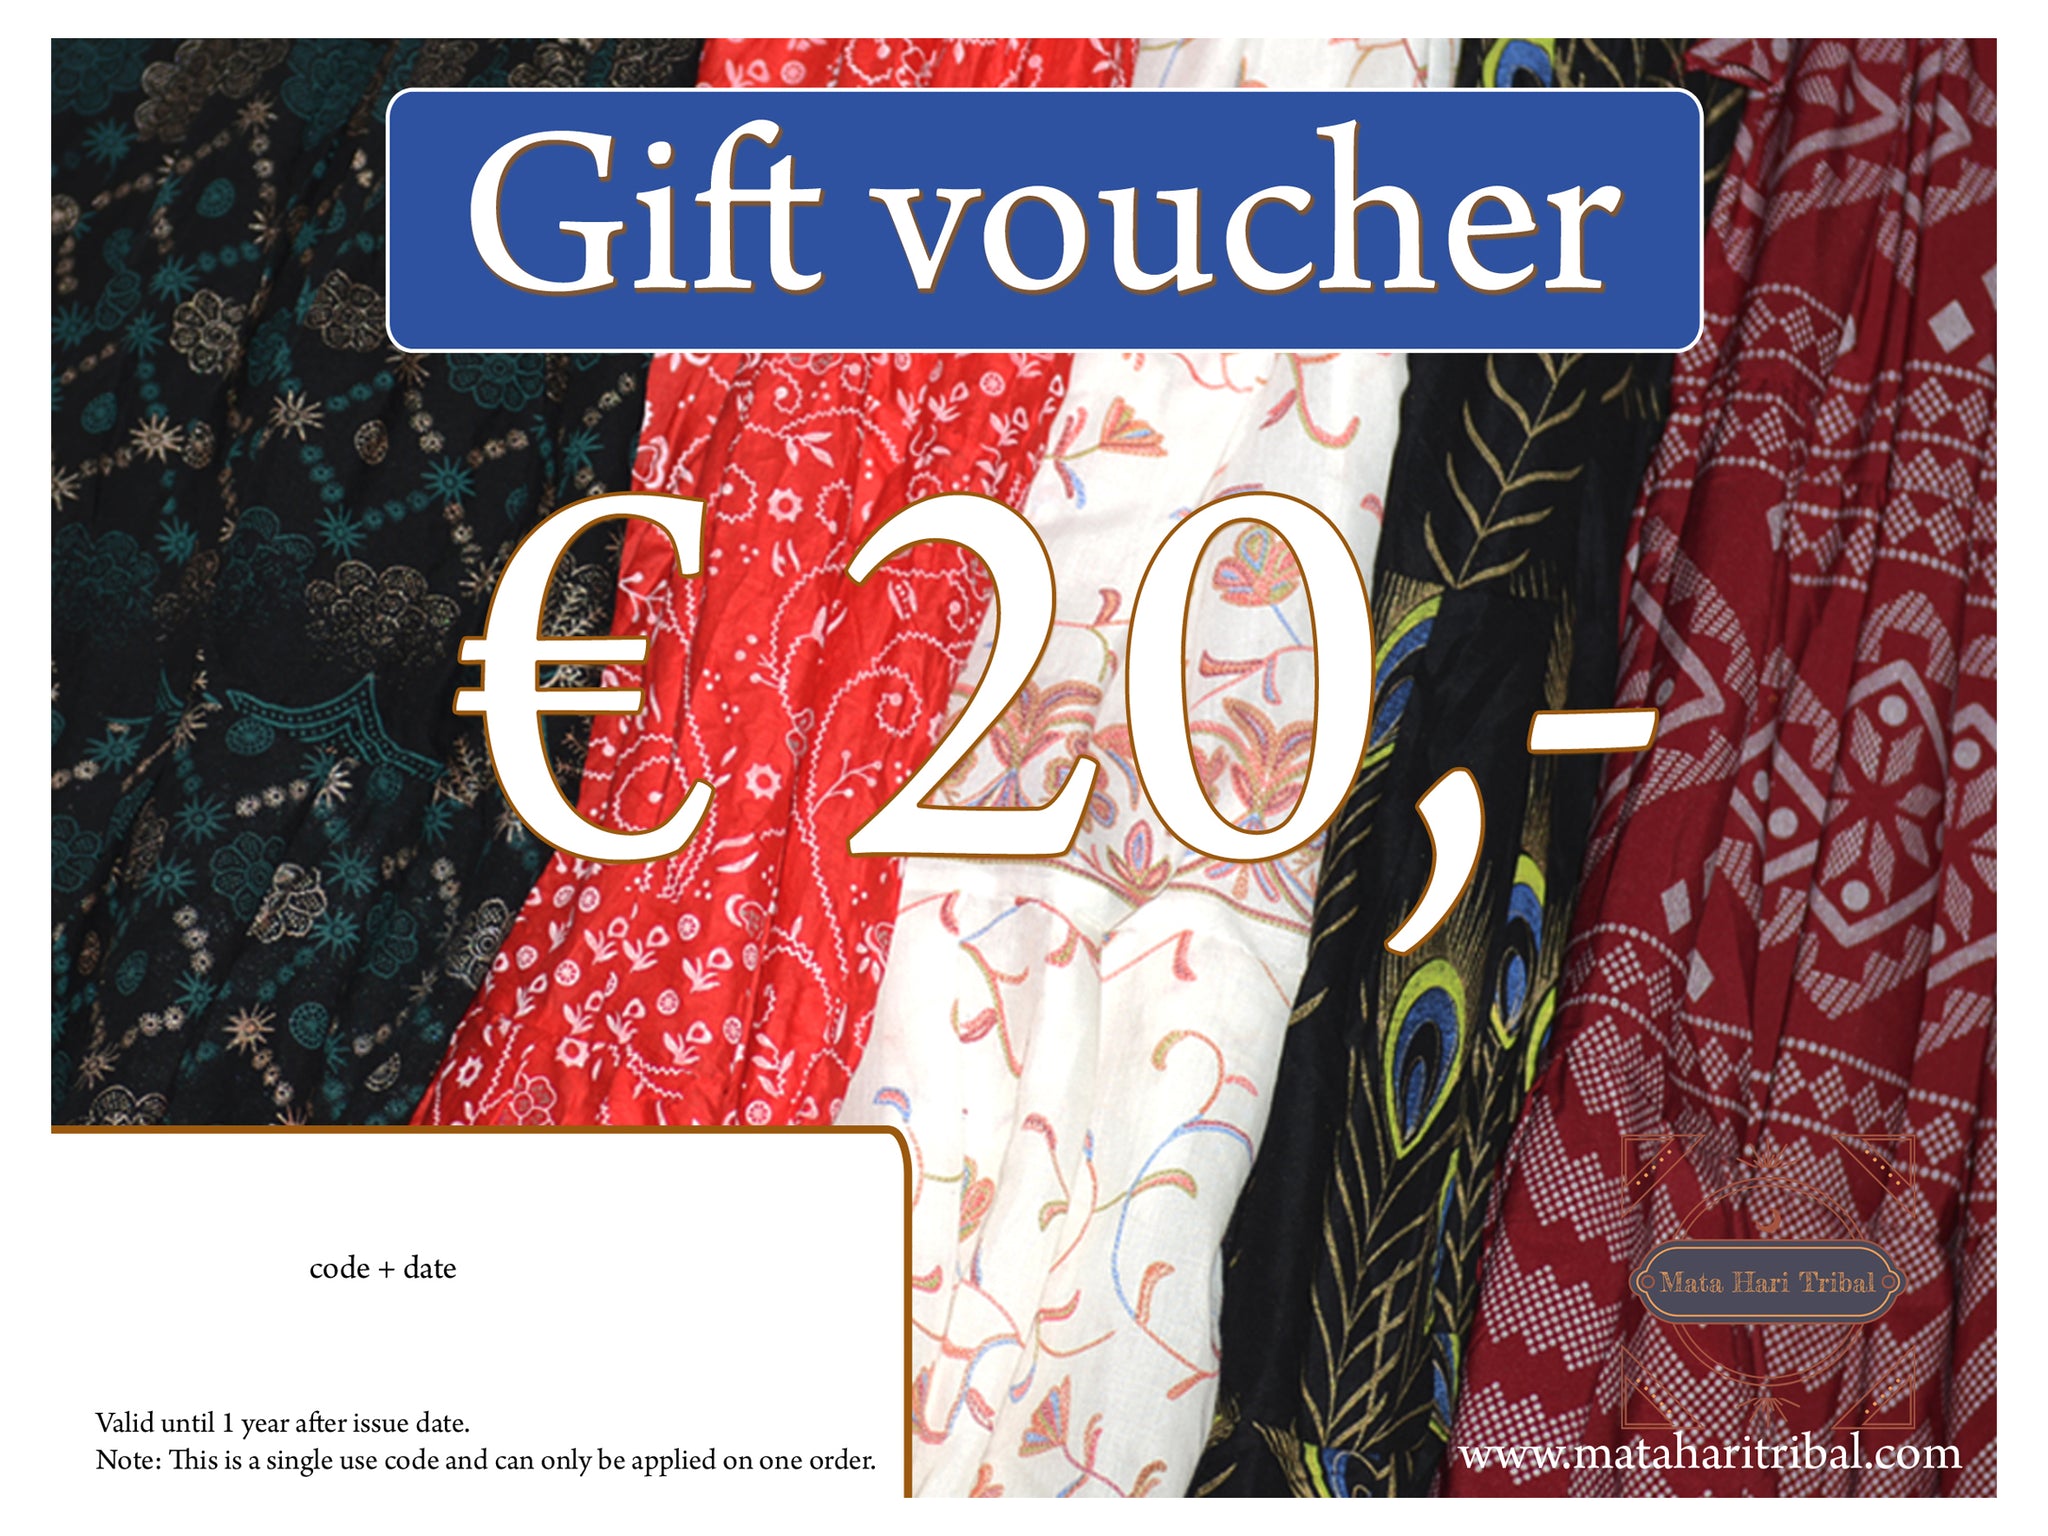 Gift Voucher €20,- printed